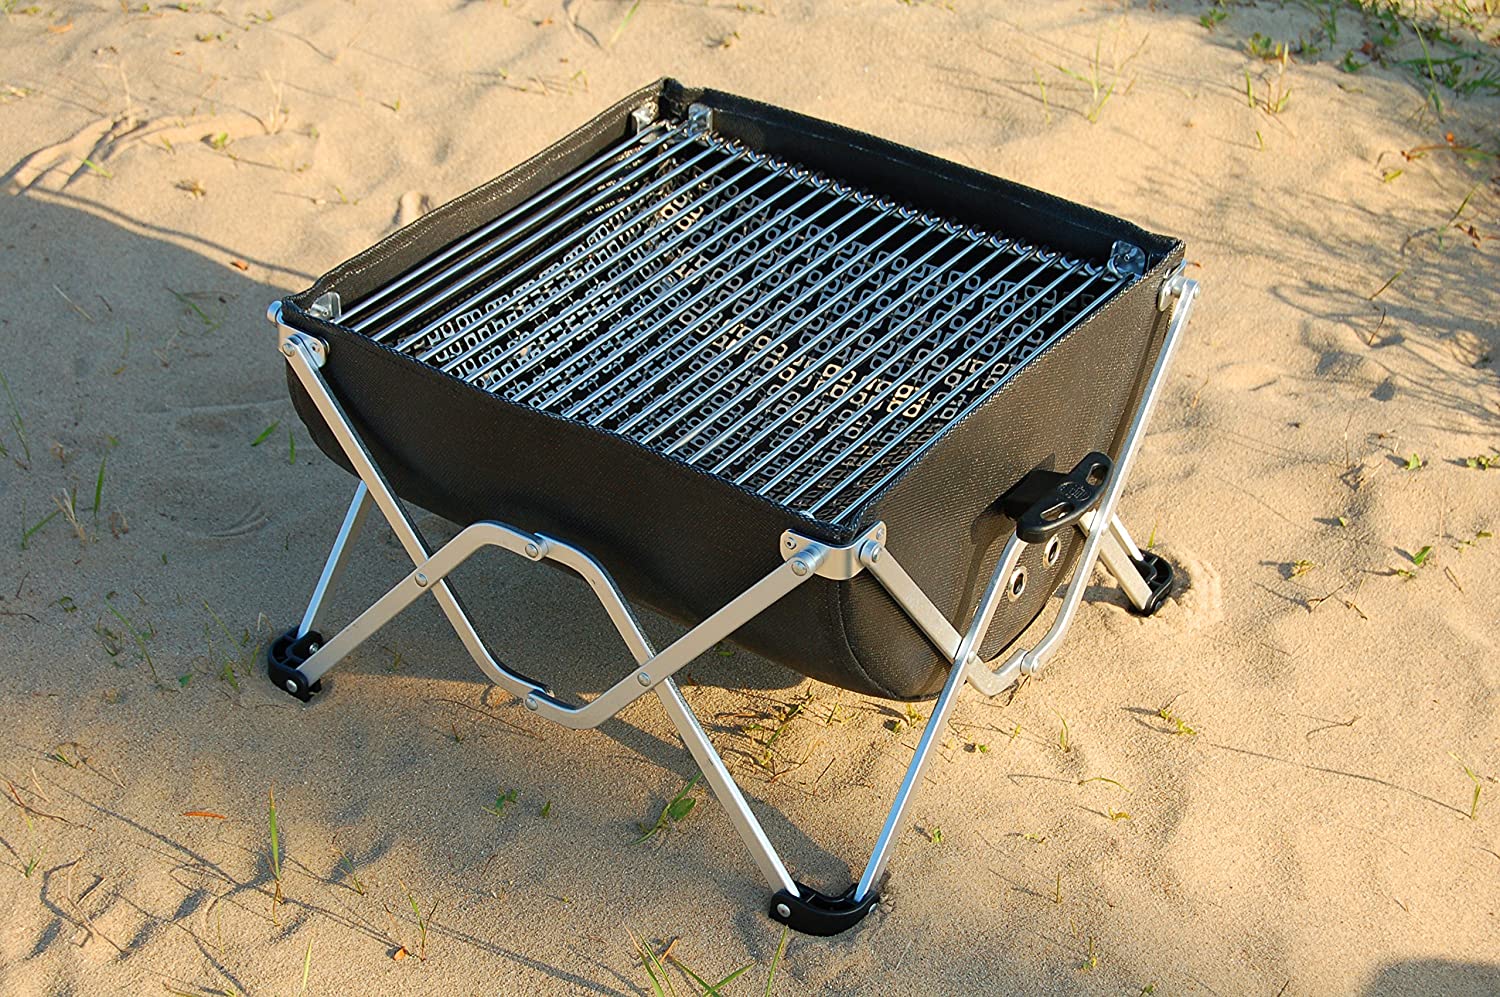 portable grill